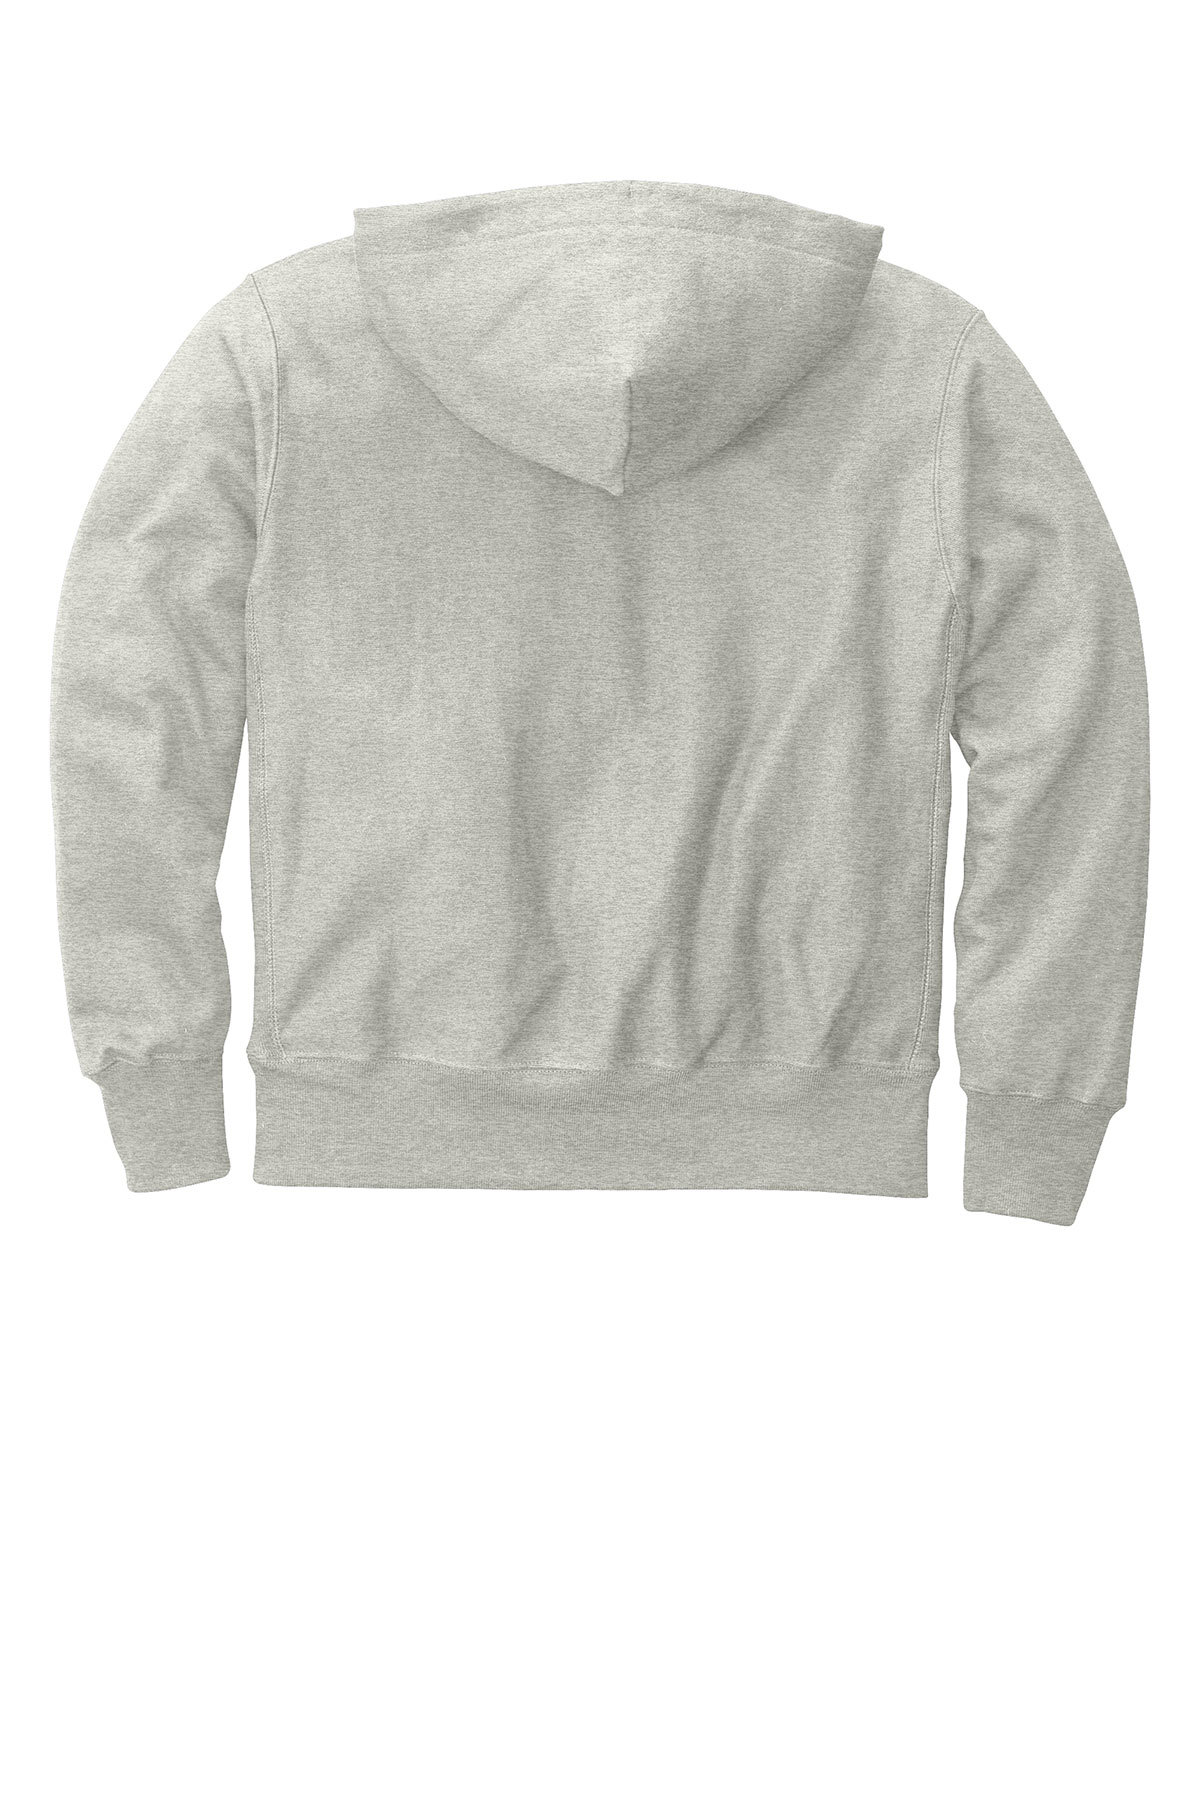 Sweatshirt Product Weave Hooded | Champion | Reverse SanMar